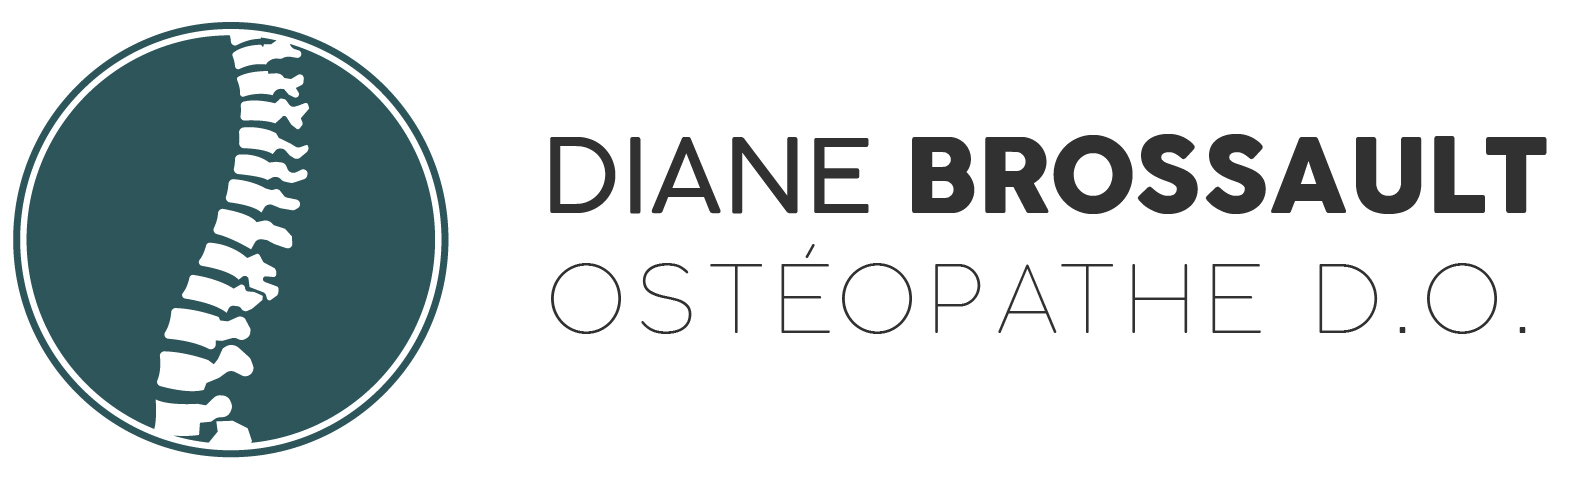 Diane Brossault Ostéopathe